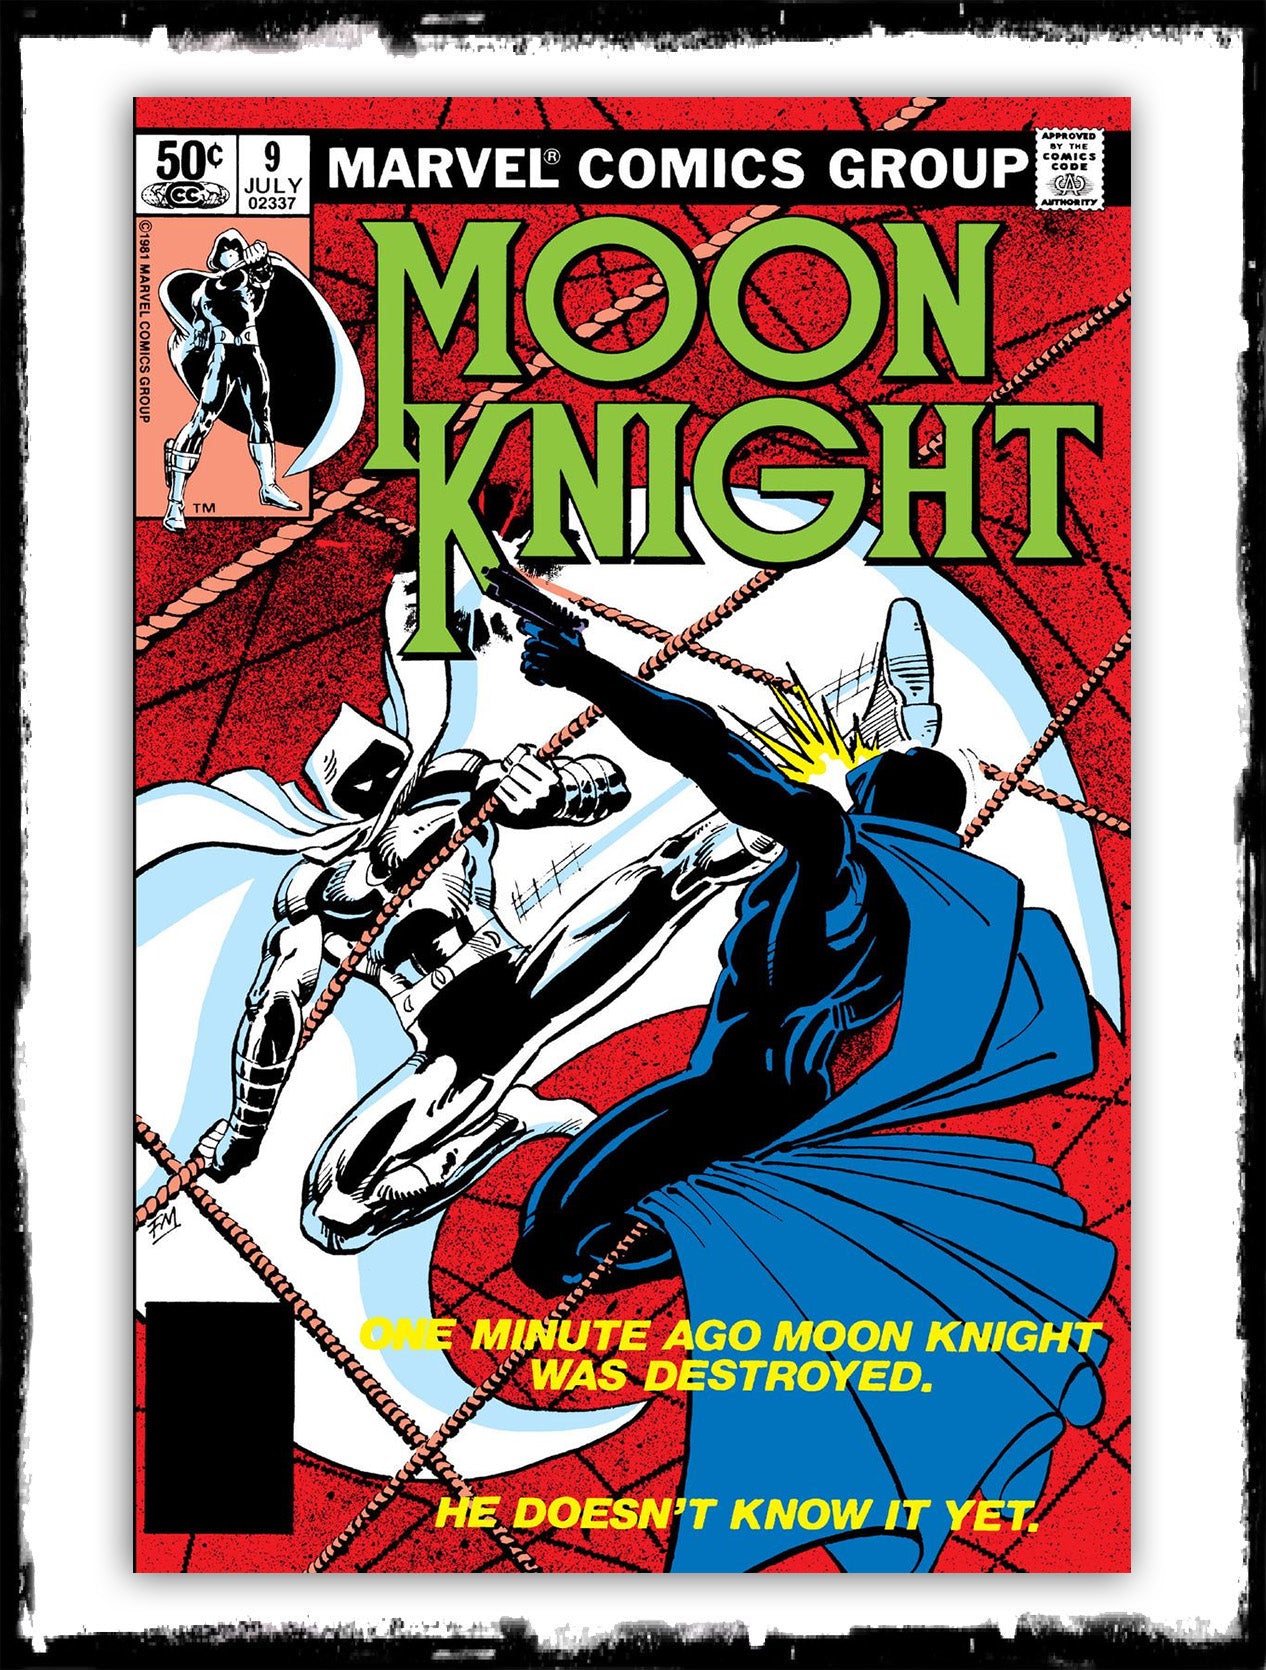 MOON KNIGHT - #9 (1981 - VF+)